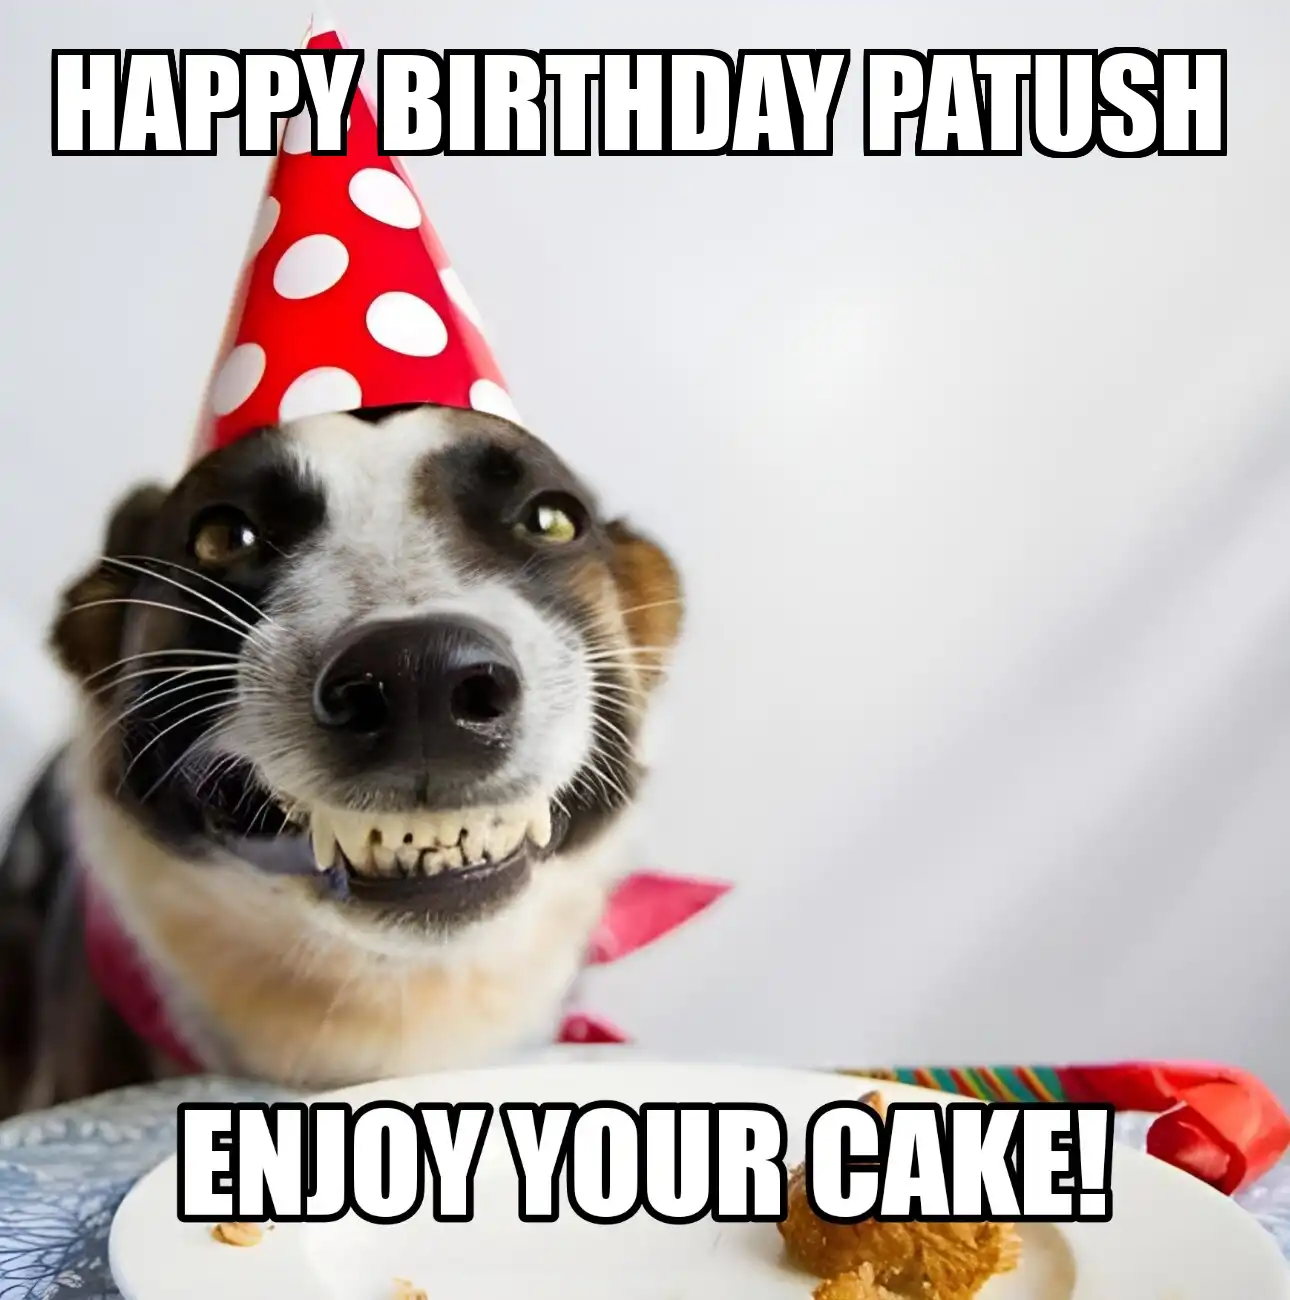 Happy Birthday Patush Enjoy Your Cake Dog Meme